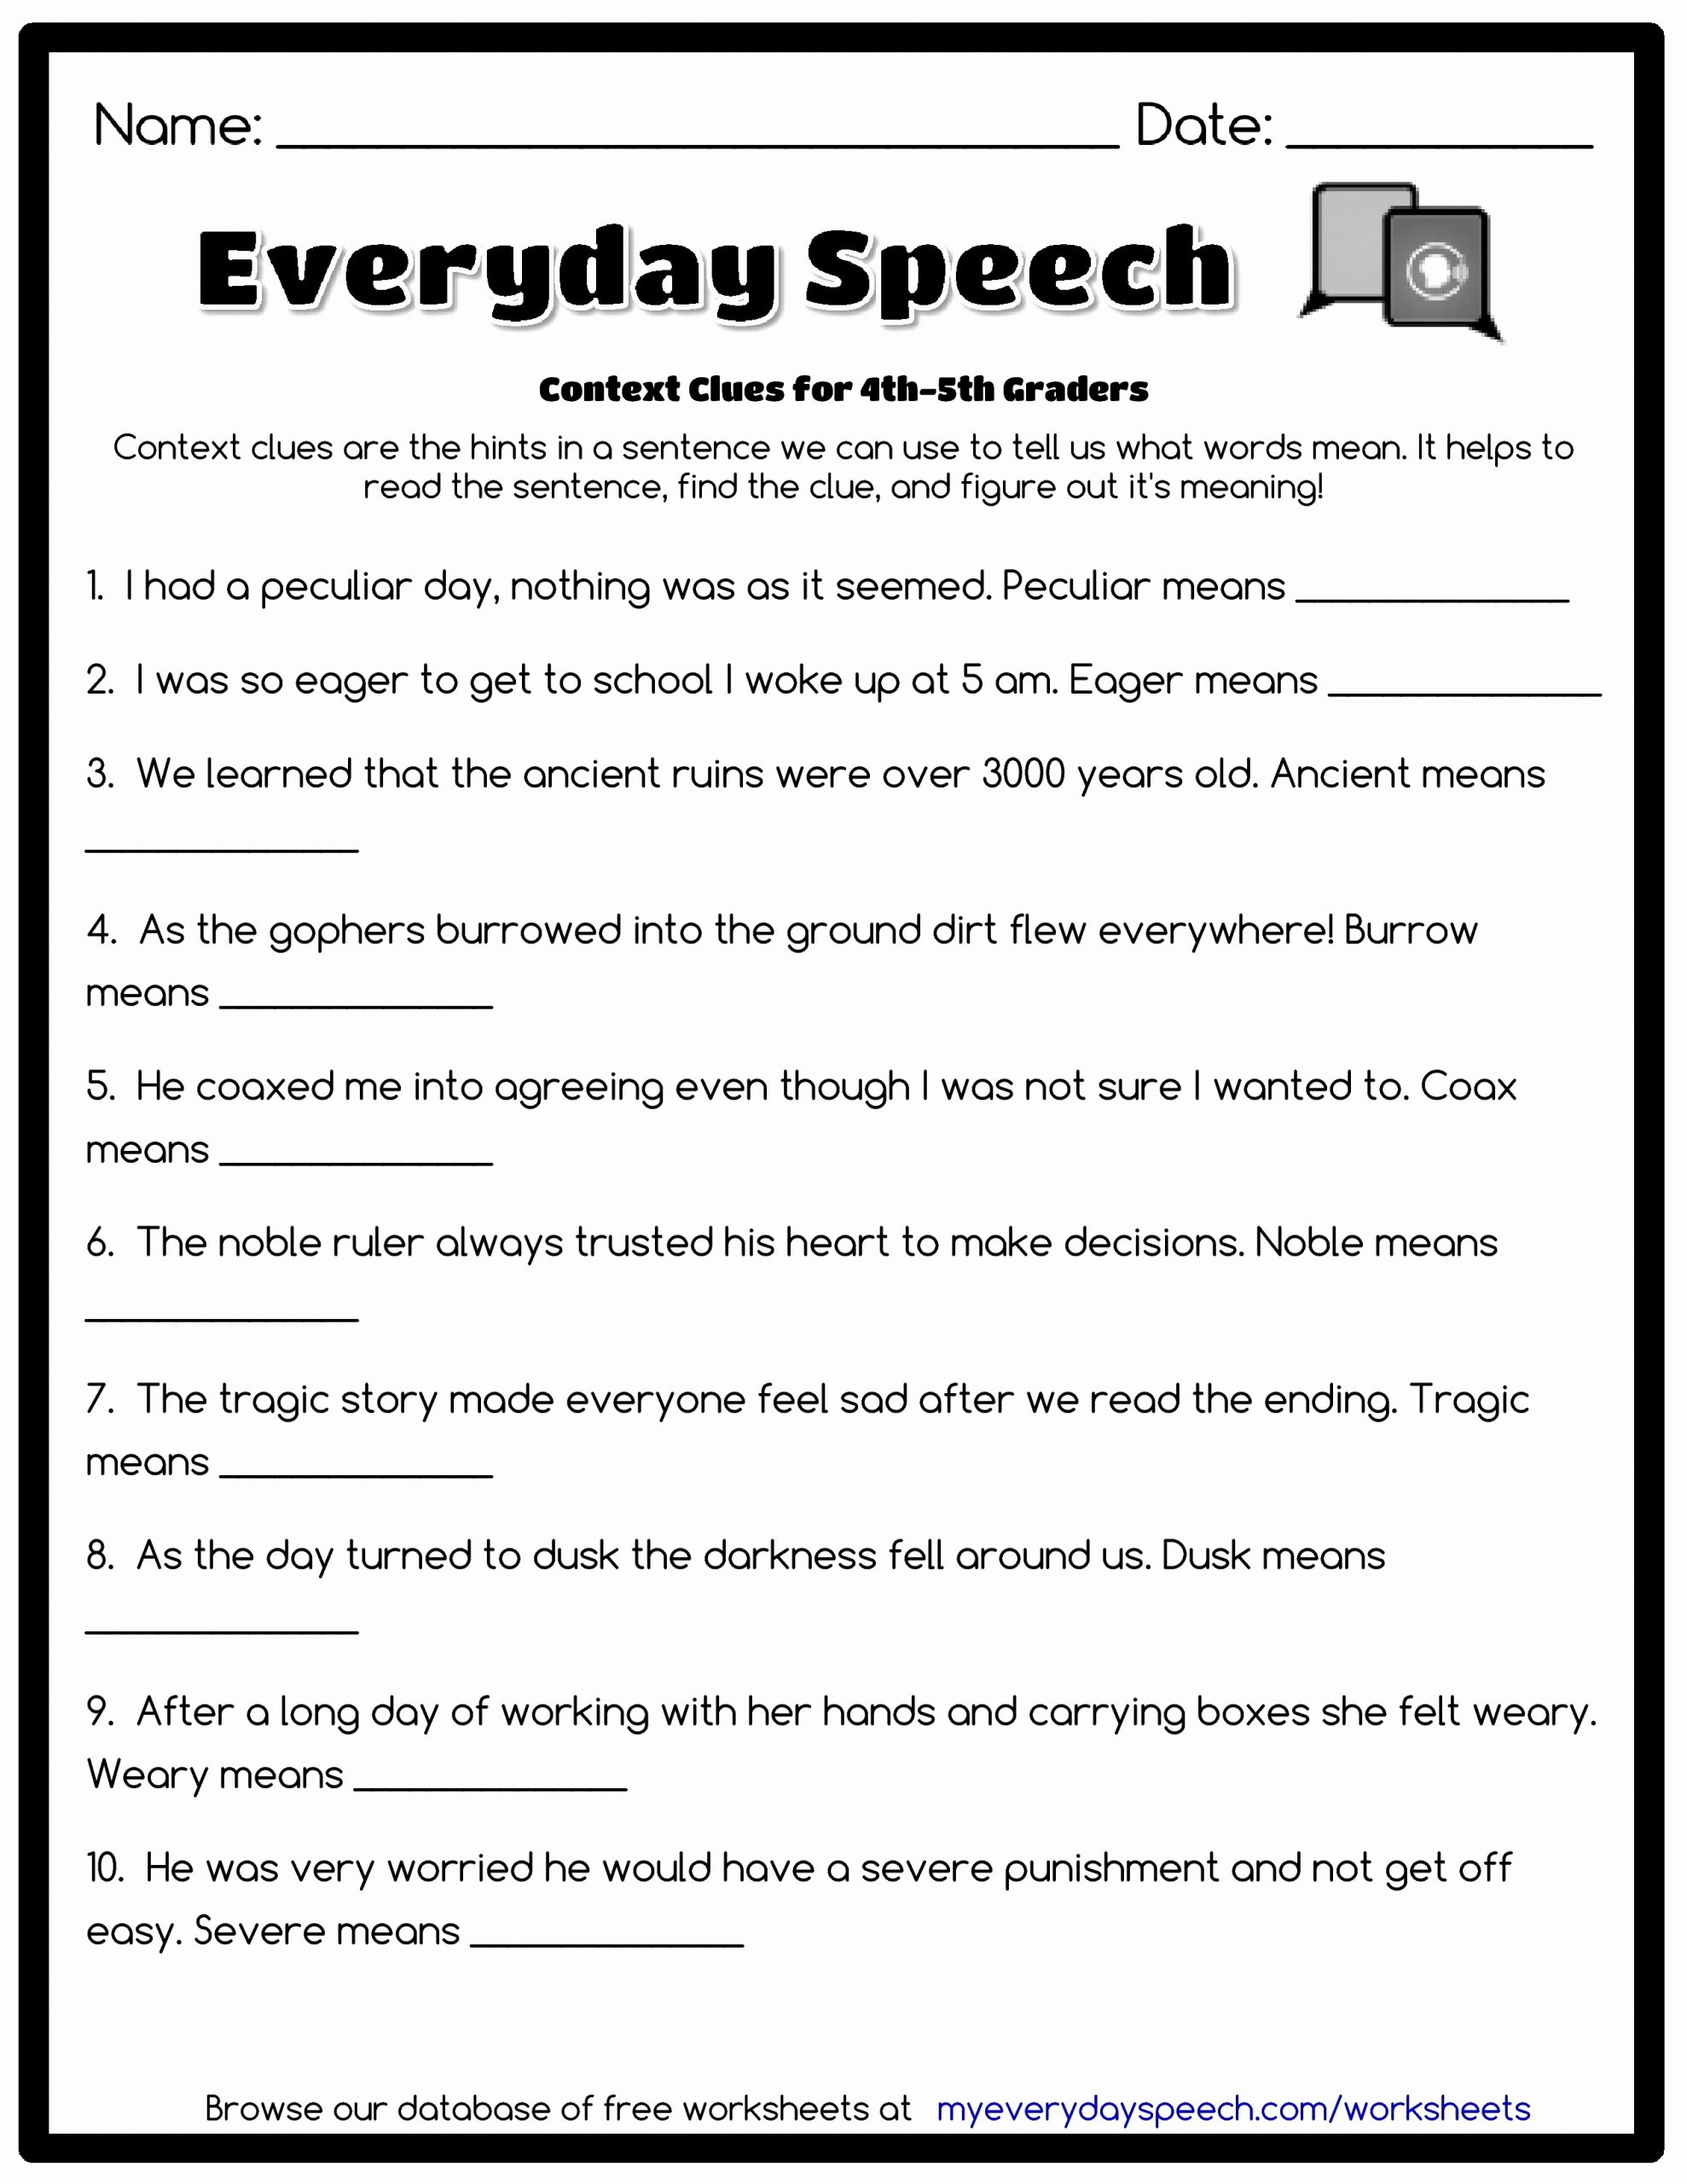 Proofreading Worksheets 3rd Grade New Free Printable Third Grade Grammar Worksheets